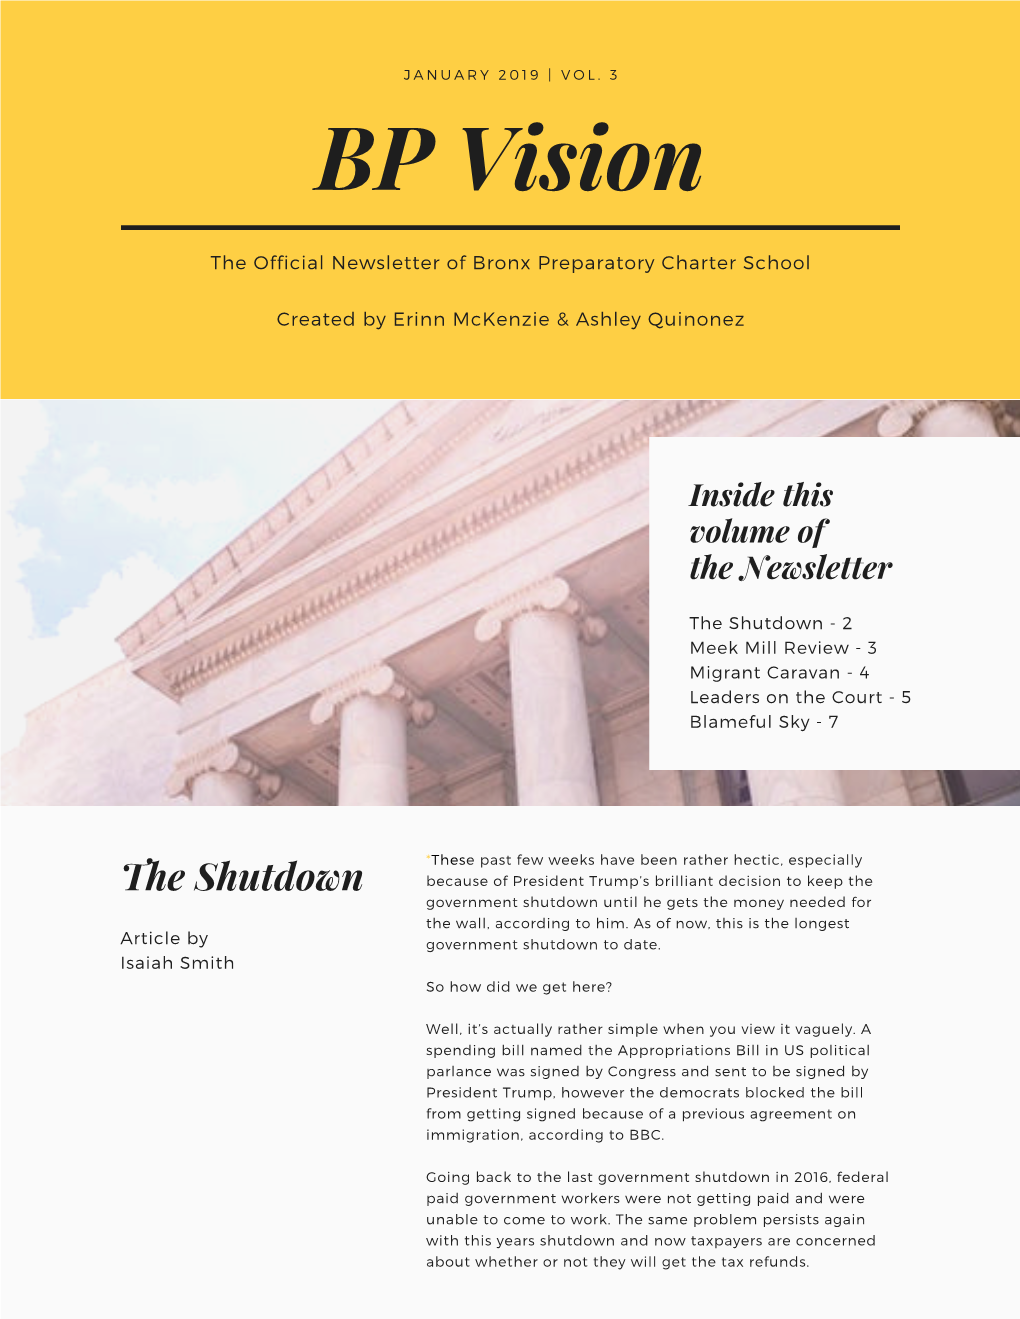 BP Vision Edition 3